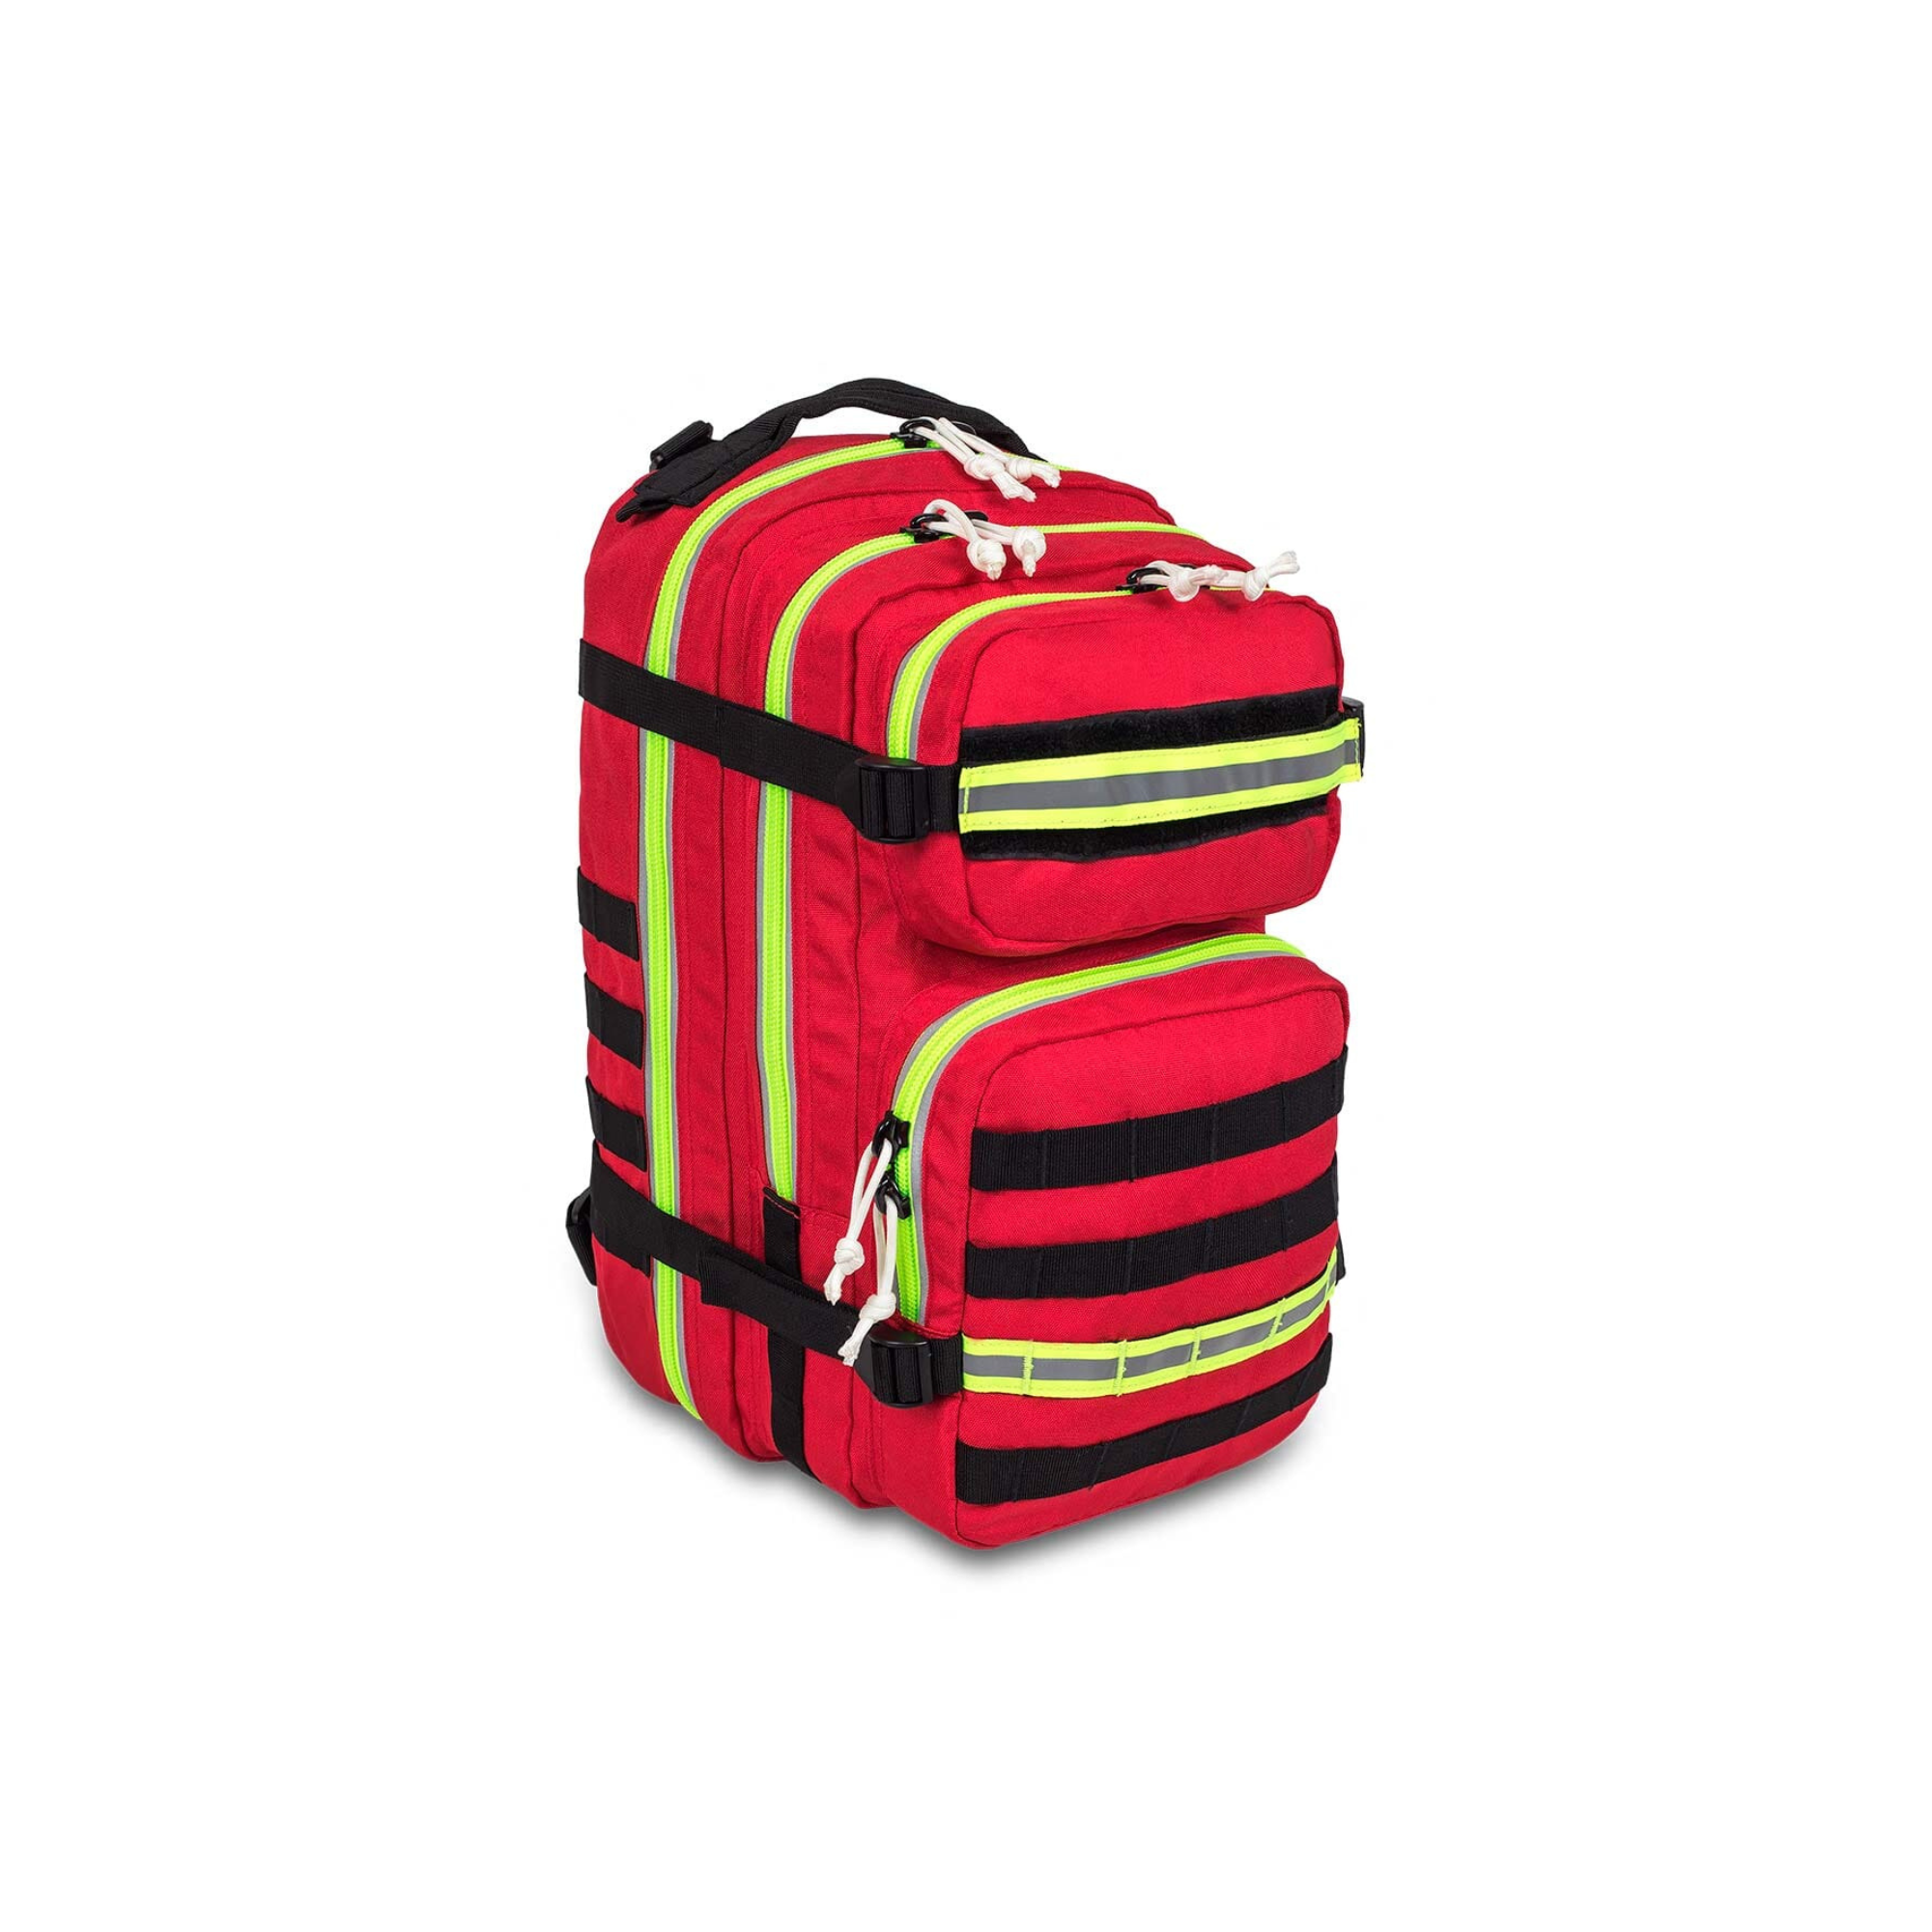 Sac à dos Urgence compact - C2 BAGS - Rouge - Elite Bags